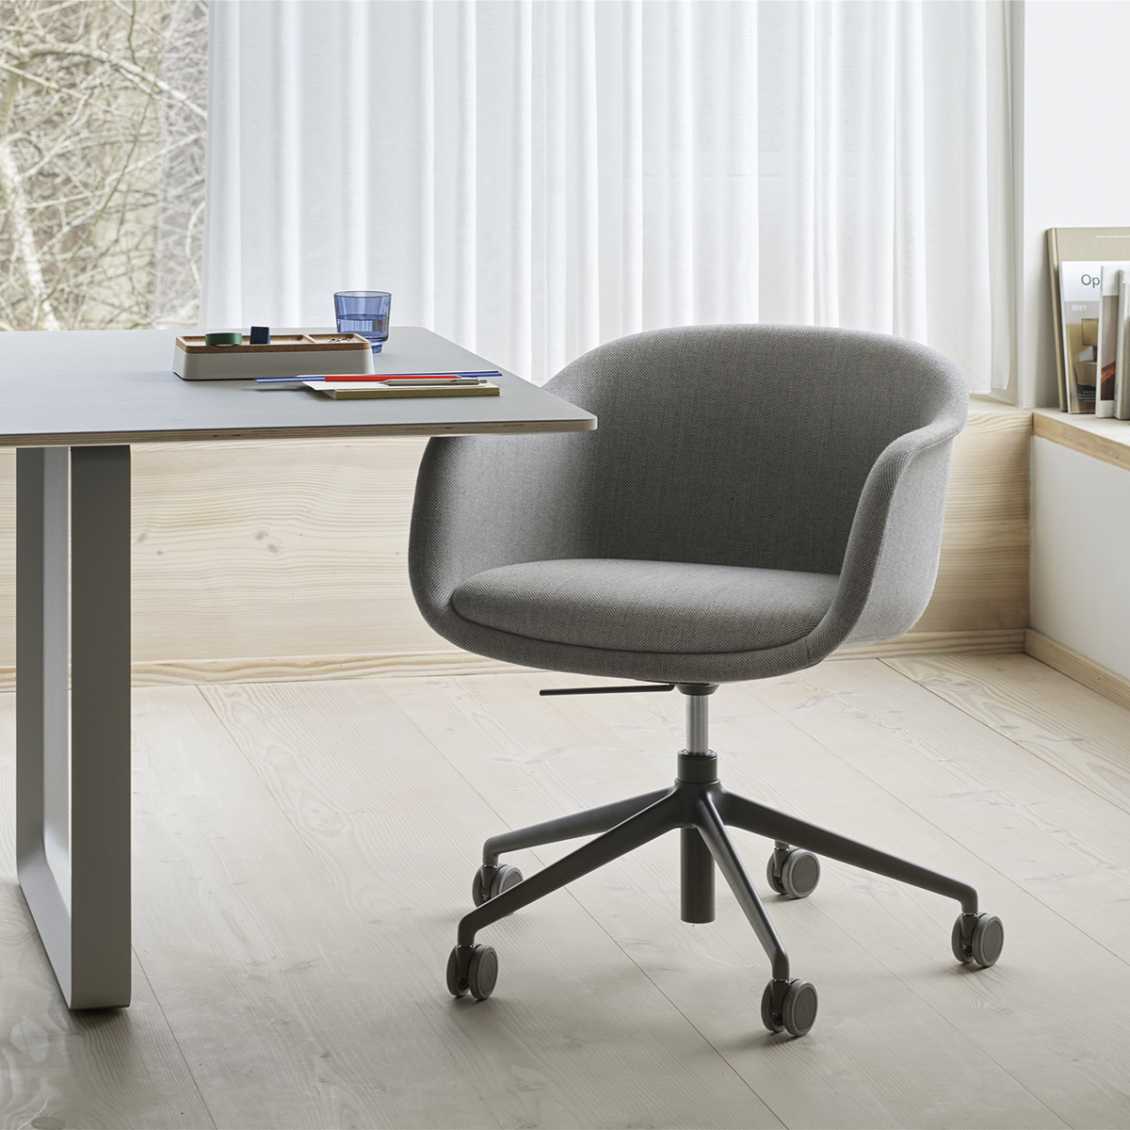 https://www.fundesign.nl/media/catalog/product/m/u/muuto-fiber-conference-armchair-with-wheels-sfeer1_2.jpg